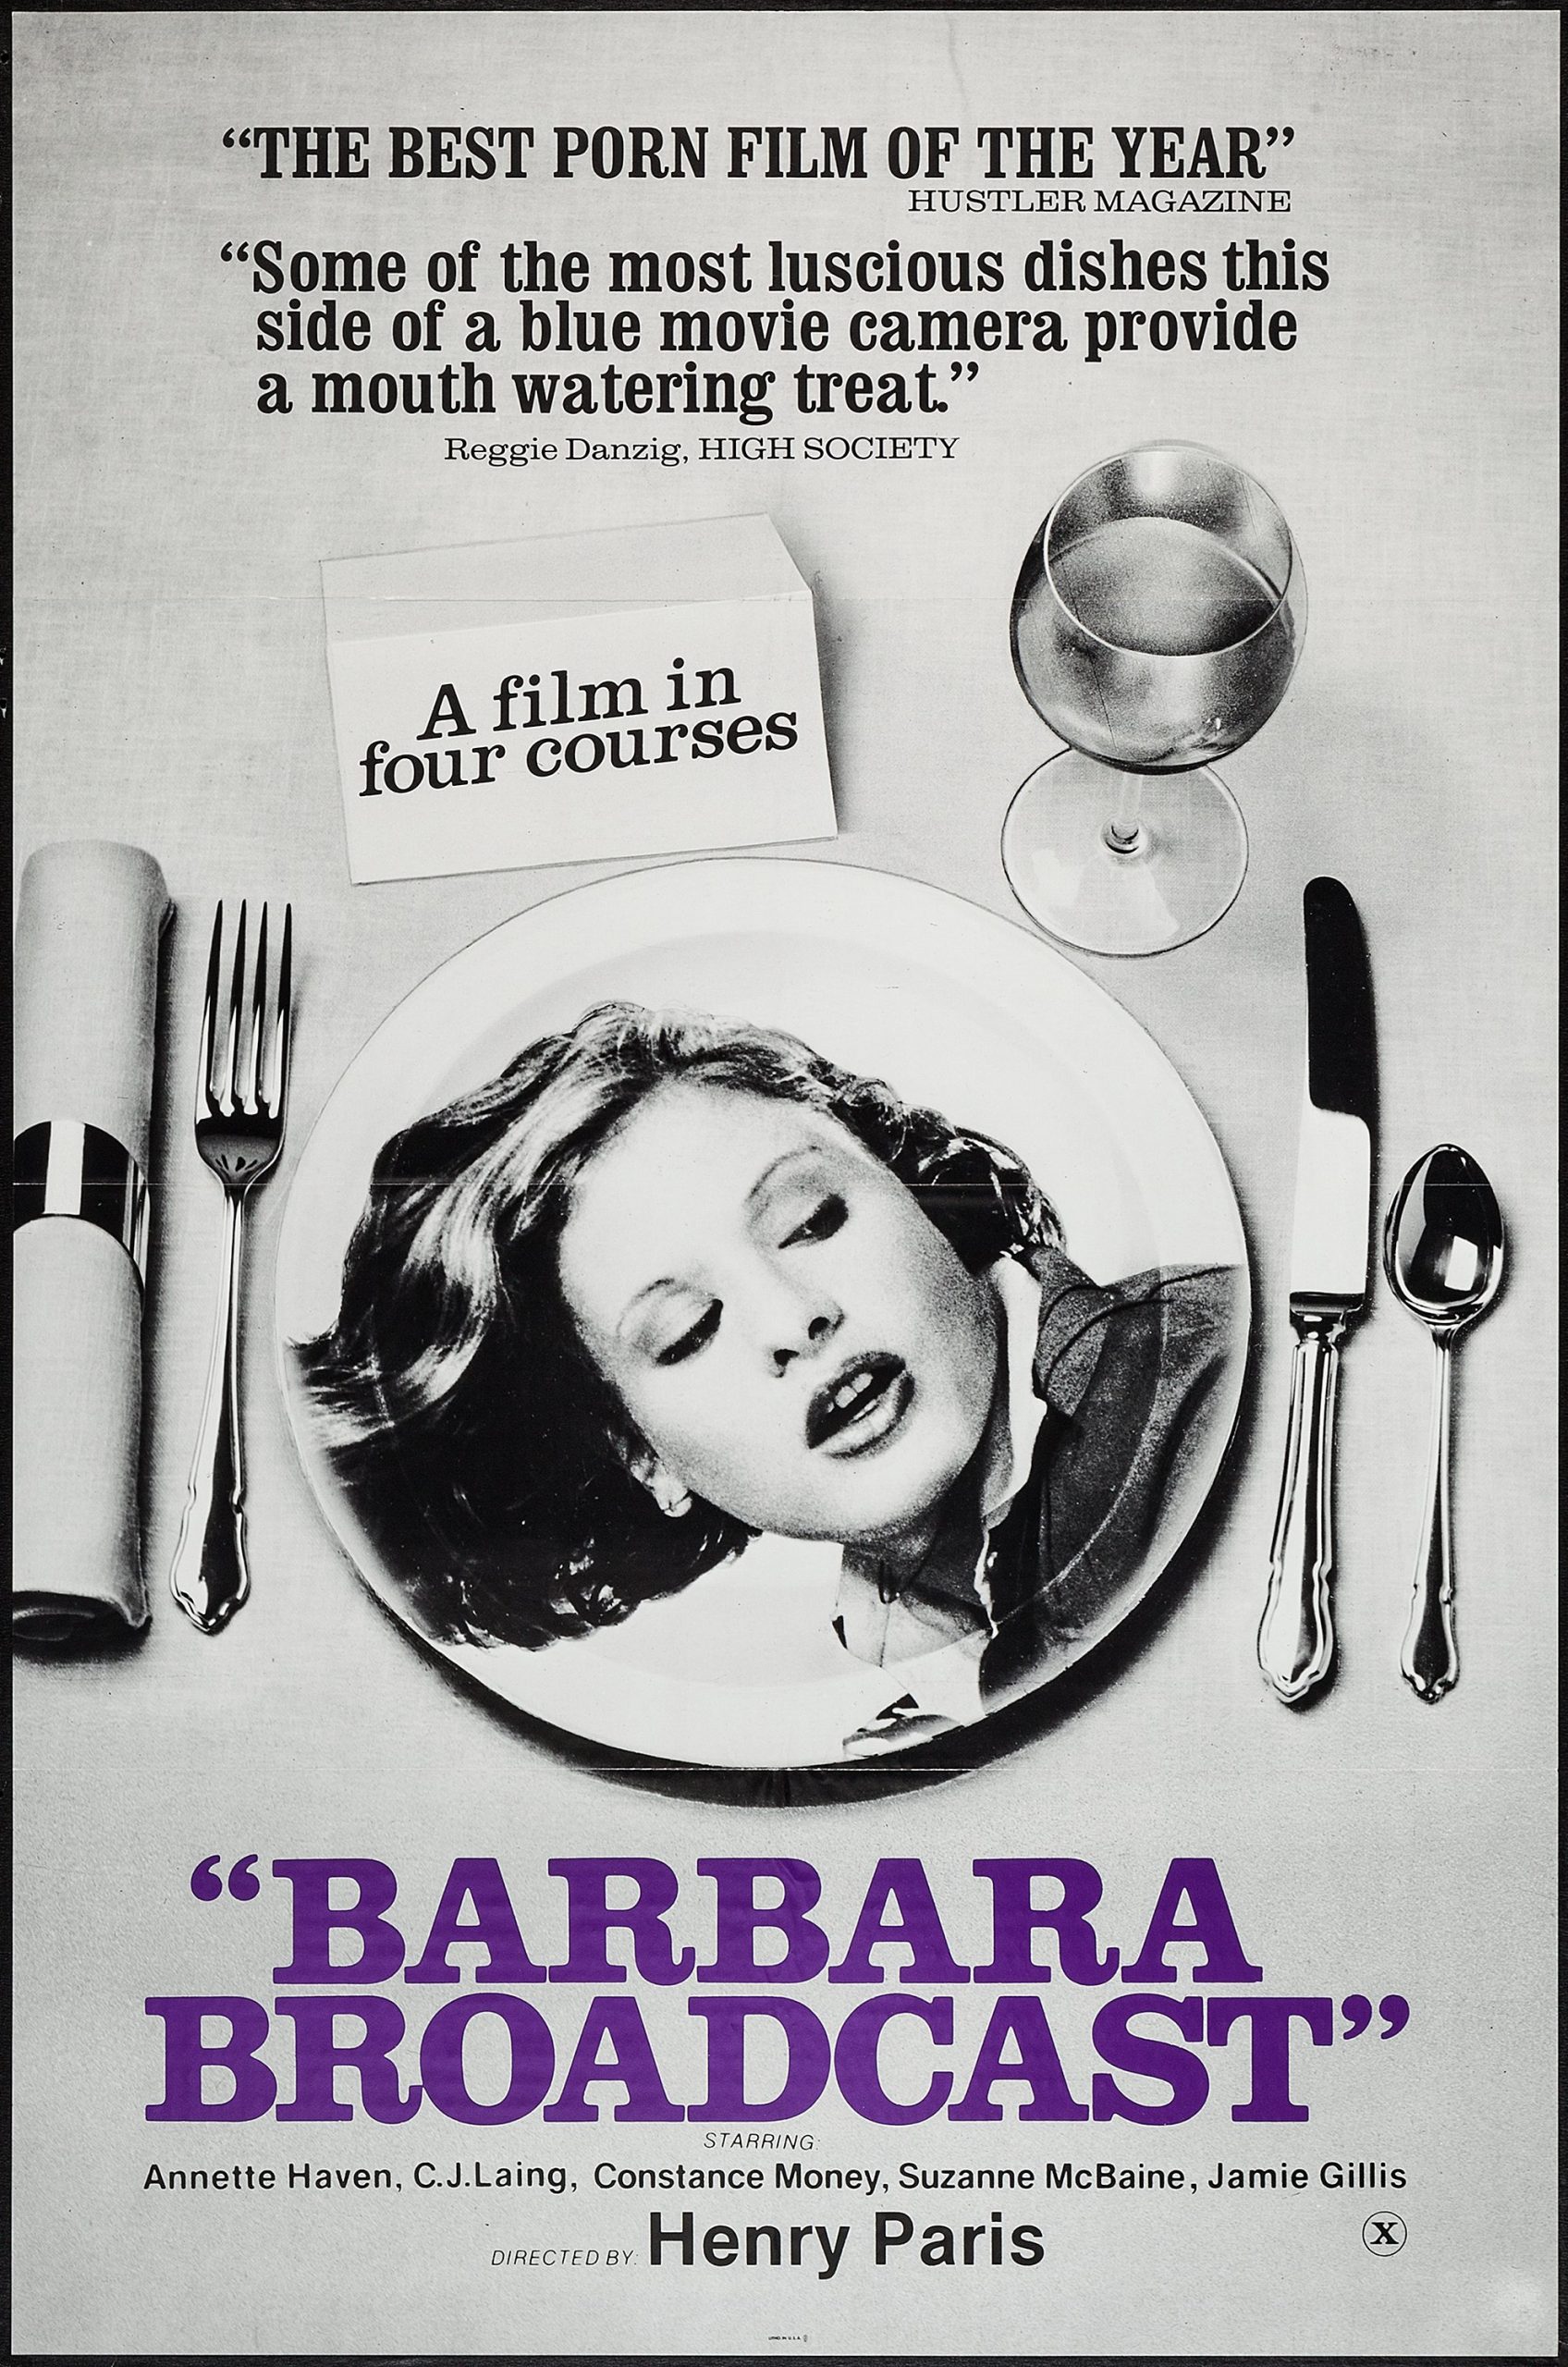 Barbara Broadcast (1977) - Original Poster - vintagepornfun.com